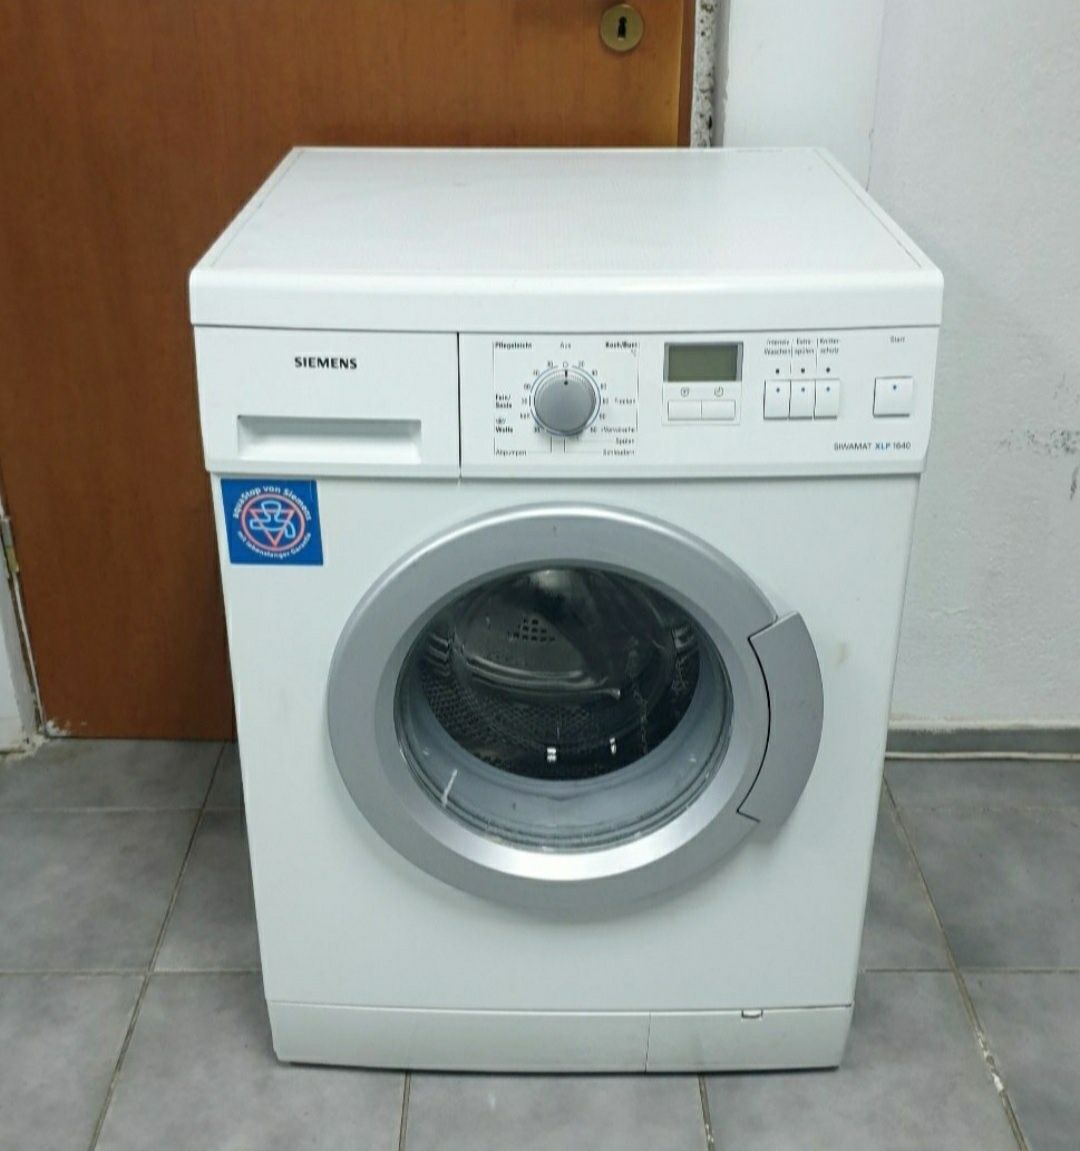 Masina de spălat rufe Siemens,  extraclasse 6432 XLS. Import Germania